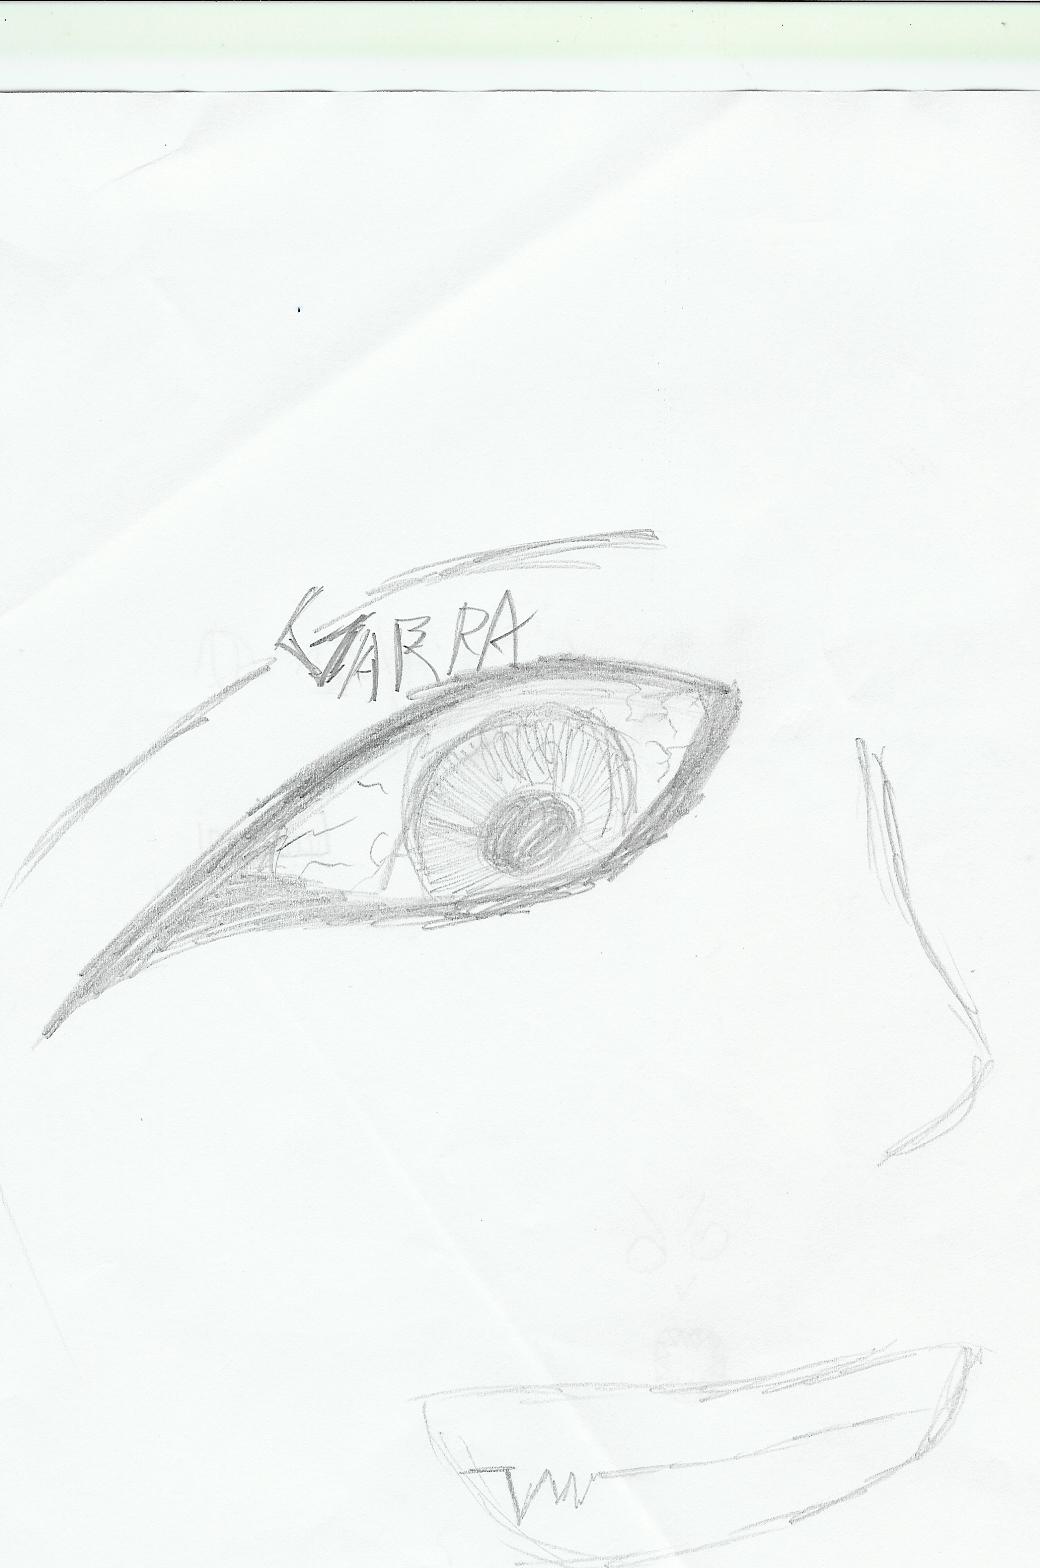 freaky gaara eye thingy by penutbutterjellytime